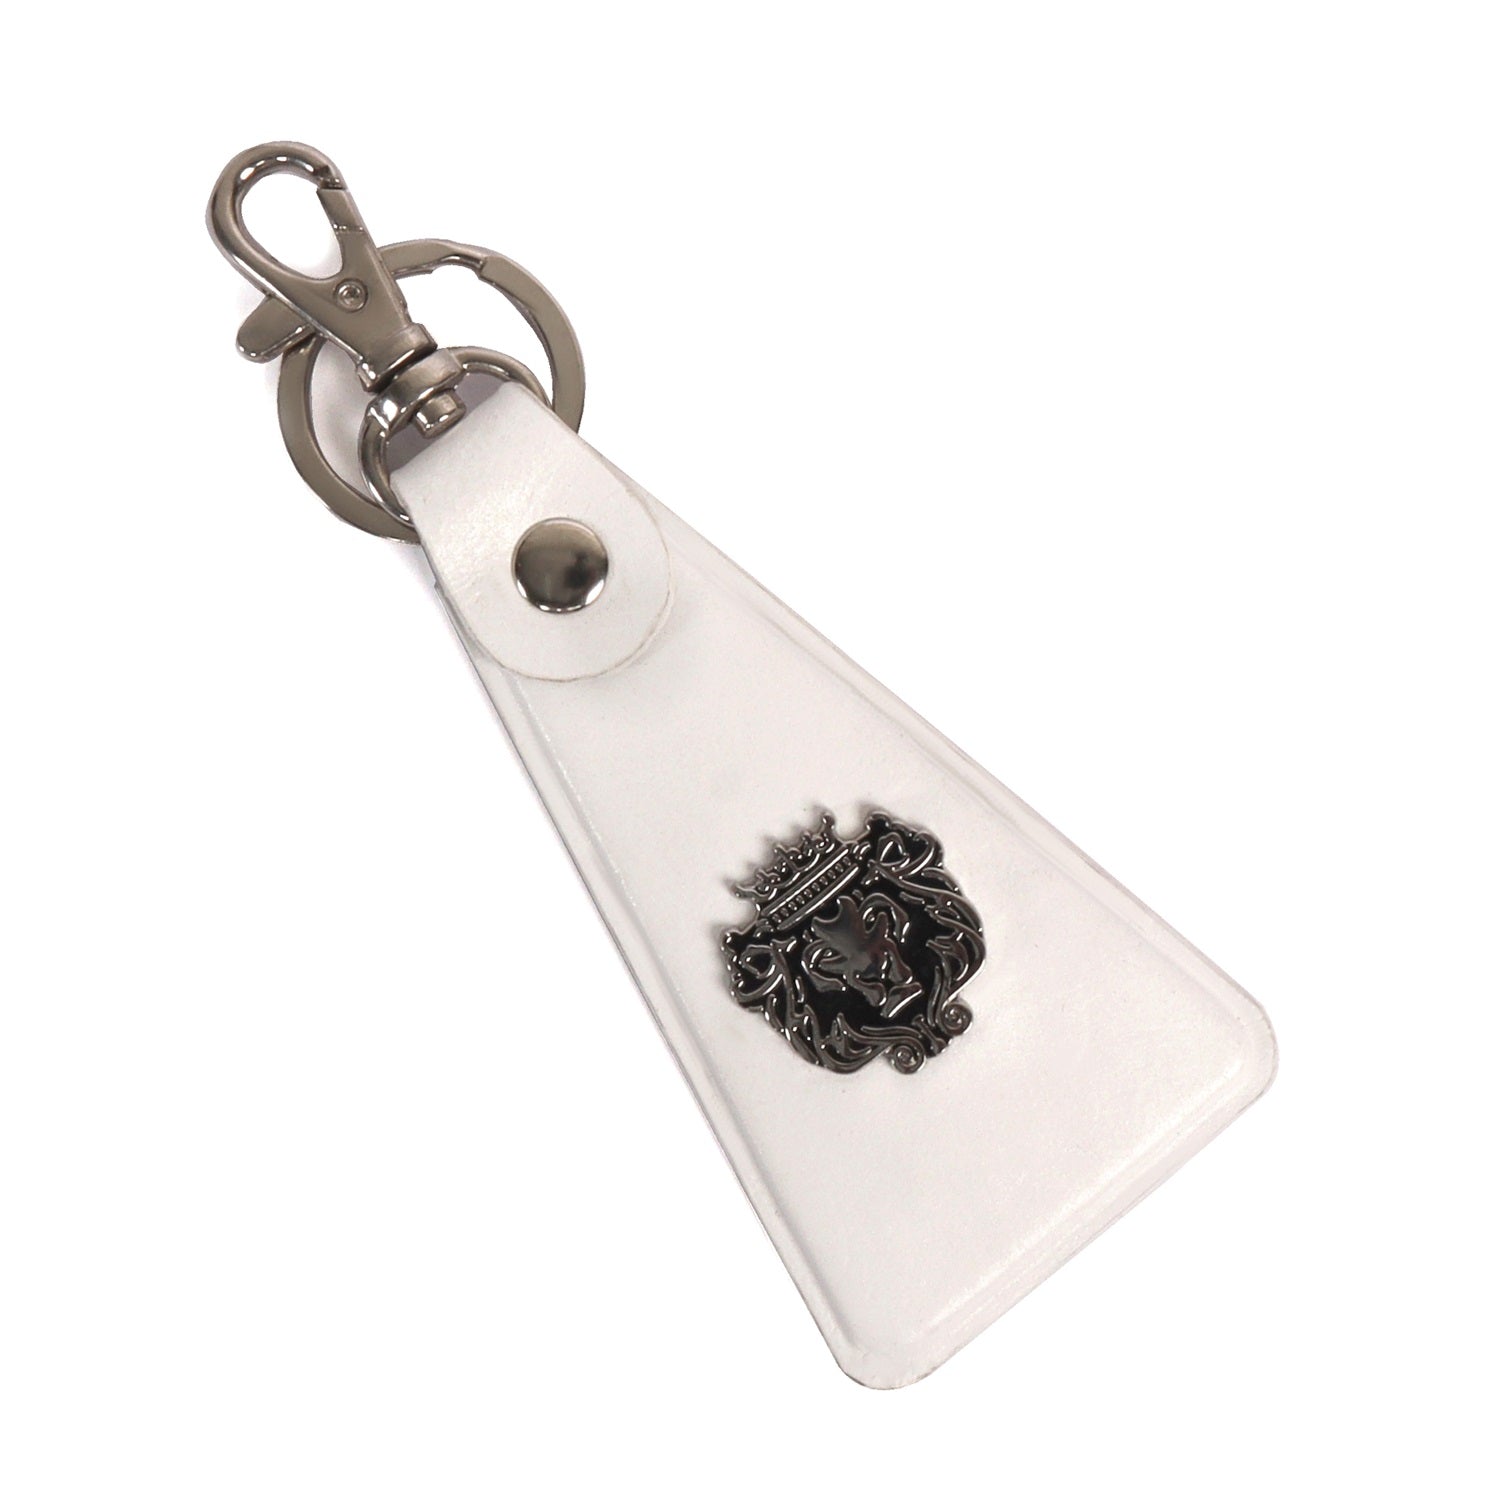 White Leather Triangular Key-chain With Belt Loop By Brune & Bareskin